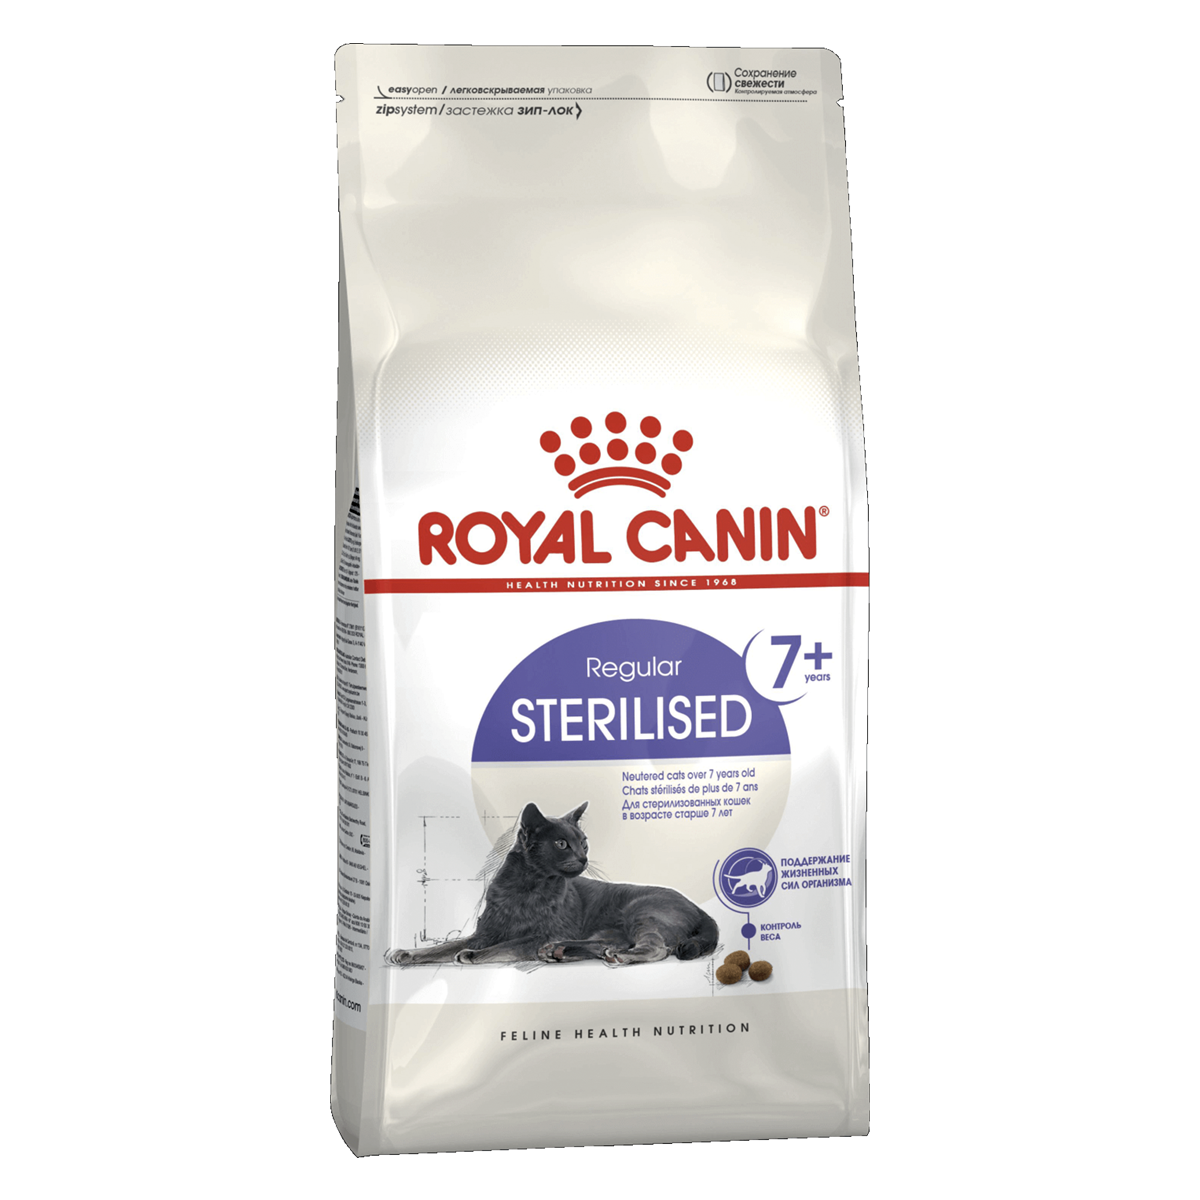 Royal Canin Sterilised 7+, 1,5 кг - корм Роял Канин для стерилизованных кошек